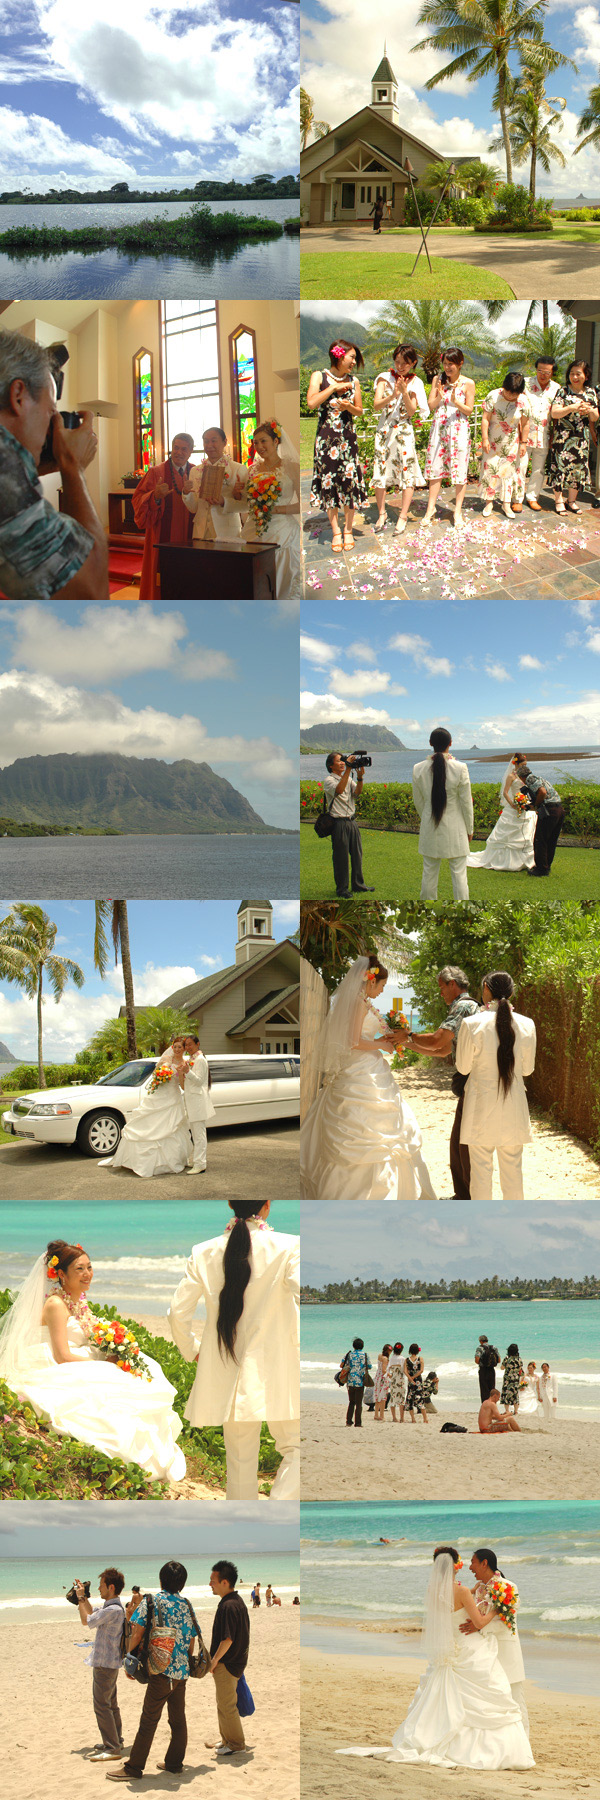 guncoさん Happy Wedding in Hawaii♪_e0083204_226063.jpg